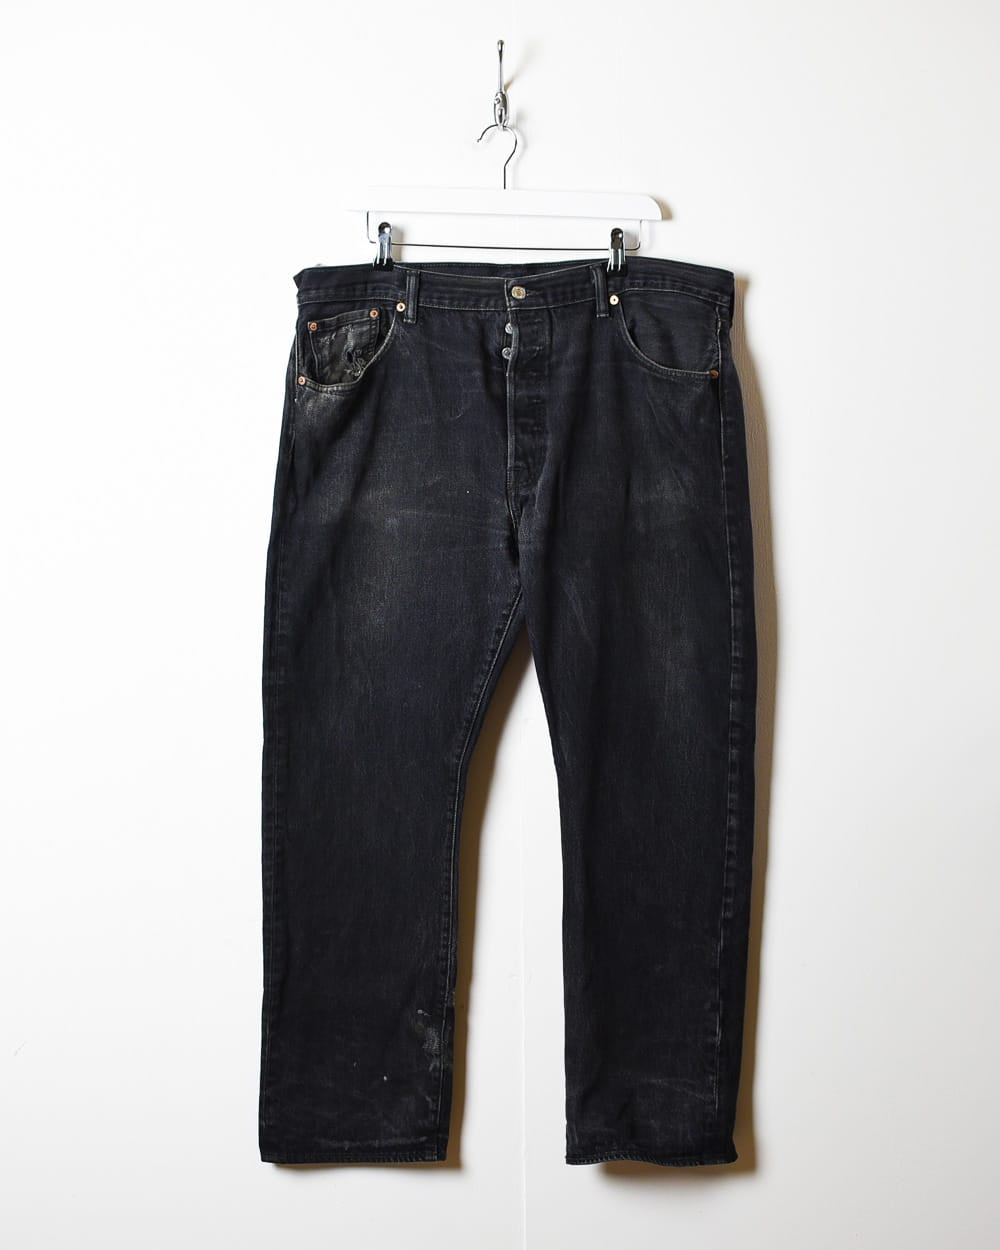 Black Levi's 501 Jeans - W40 L30